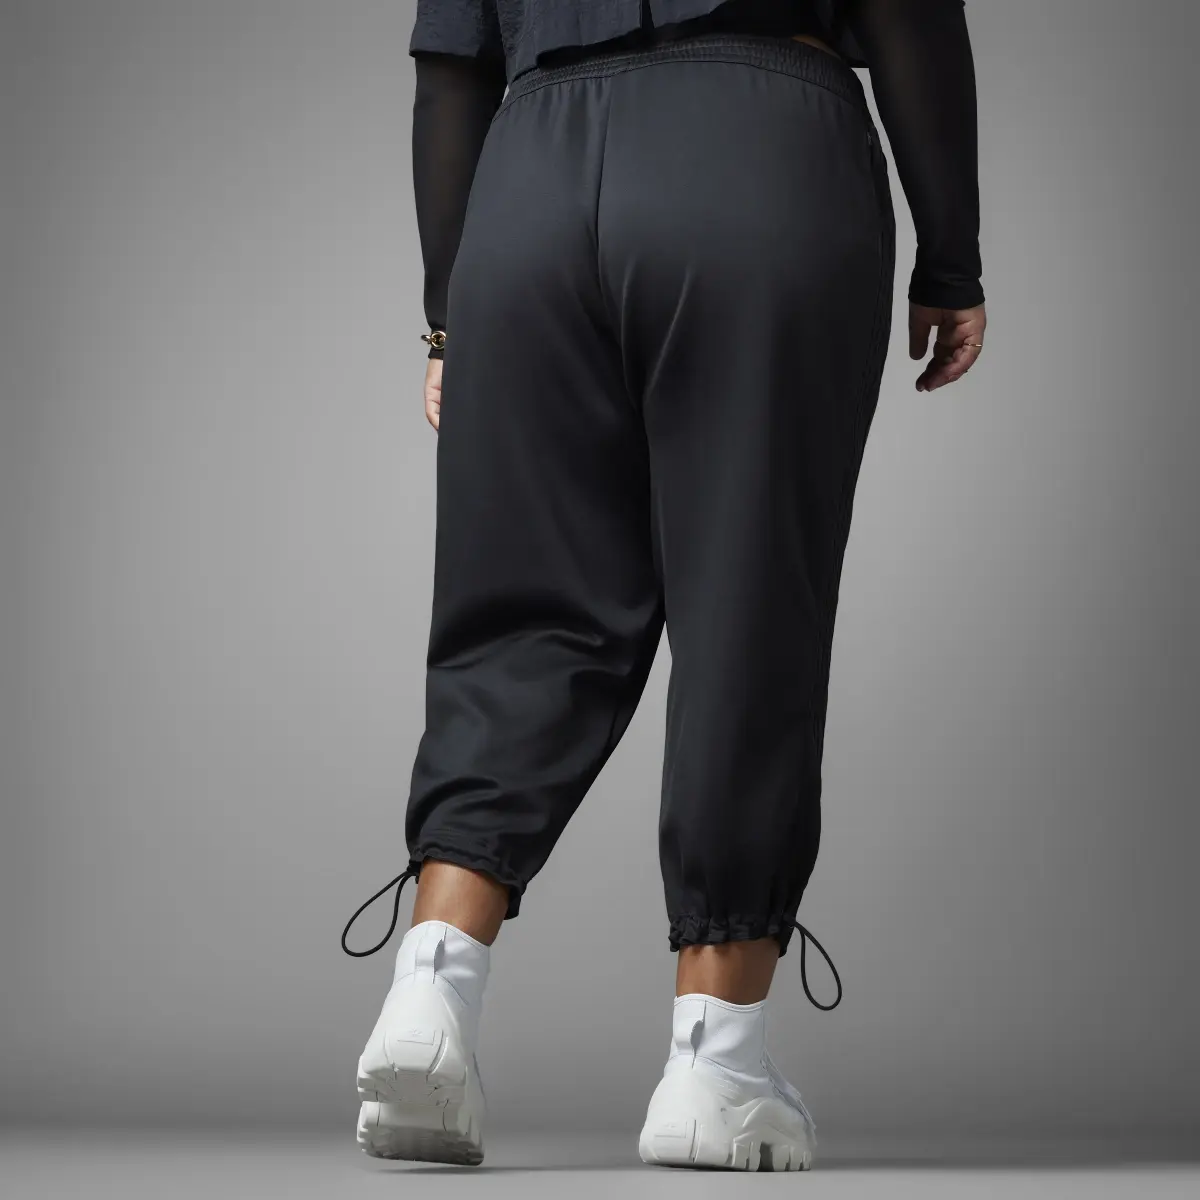 Adidas Always Original Pants (Plus Size). 2